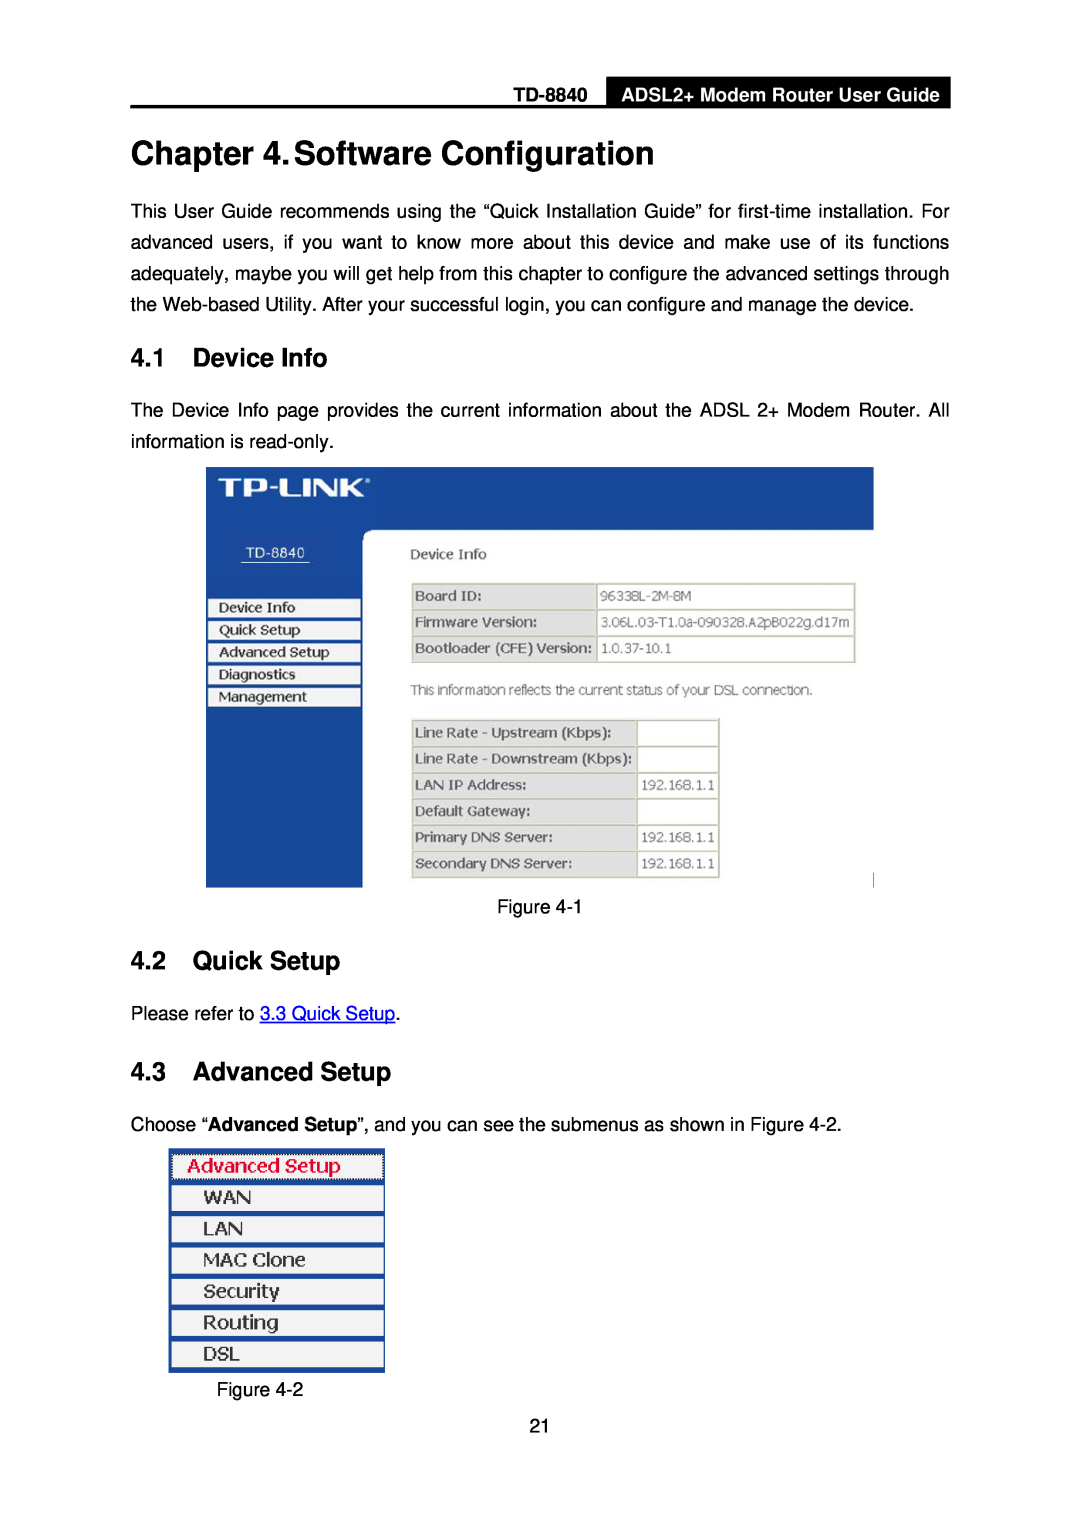 TP-Link TD-8840 Software Configuration, 4.1Device Info, 4.2Quick Setup, 4.3Advanced Setup, ADSL2+ Modem Router User Guide 